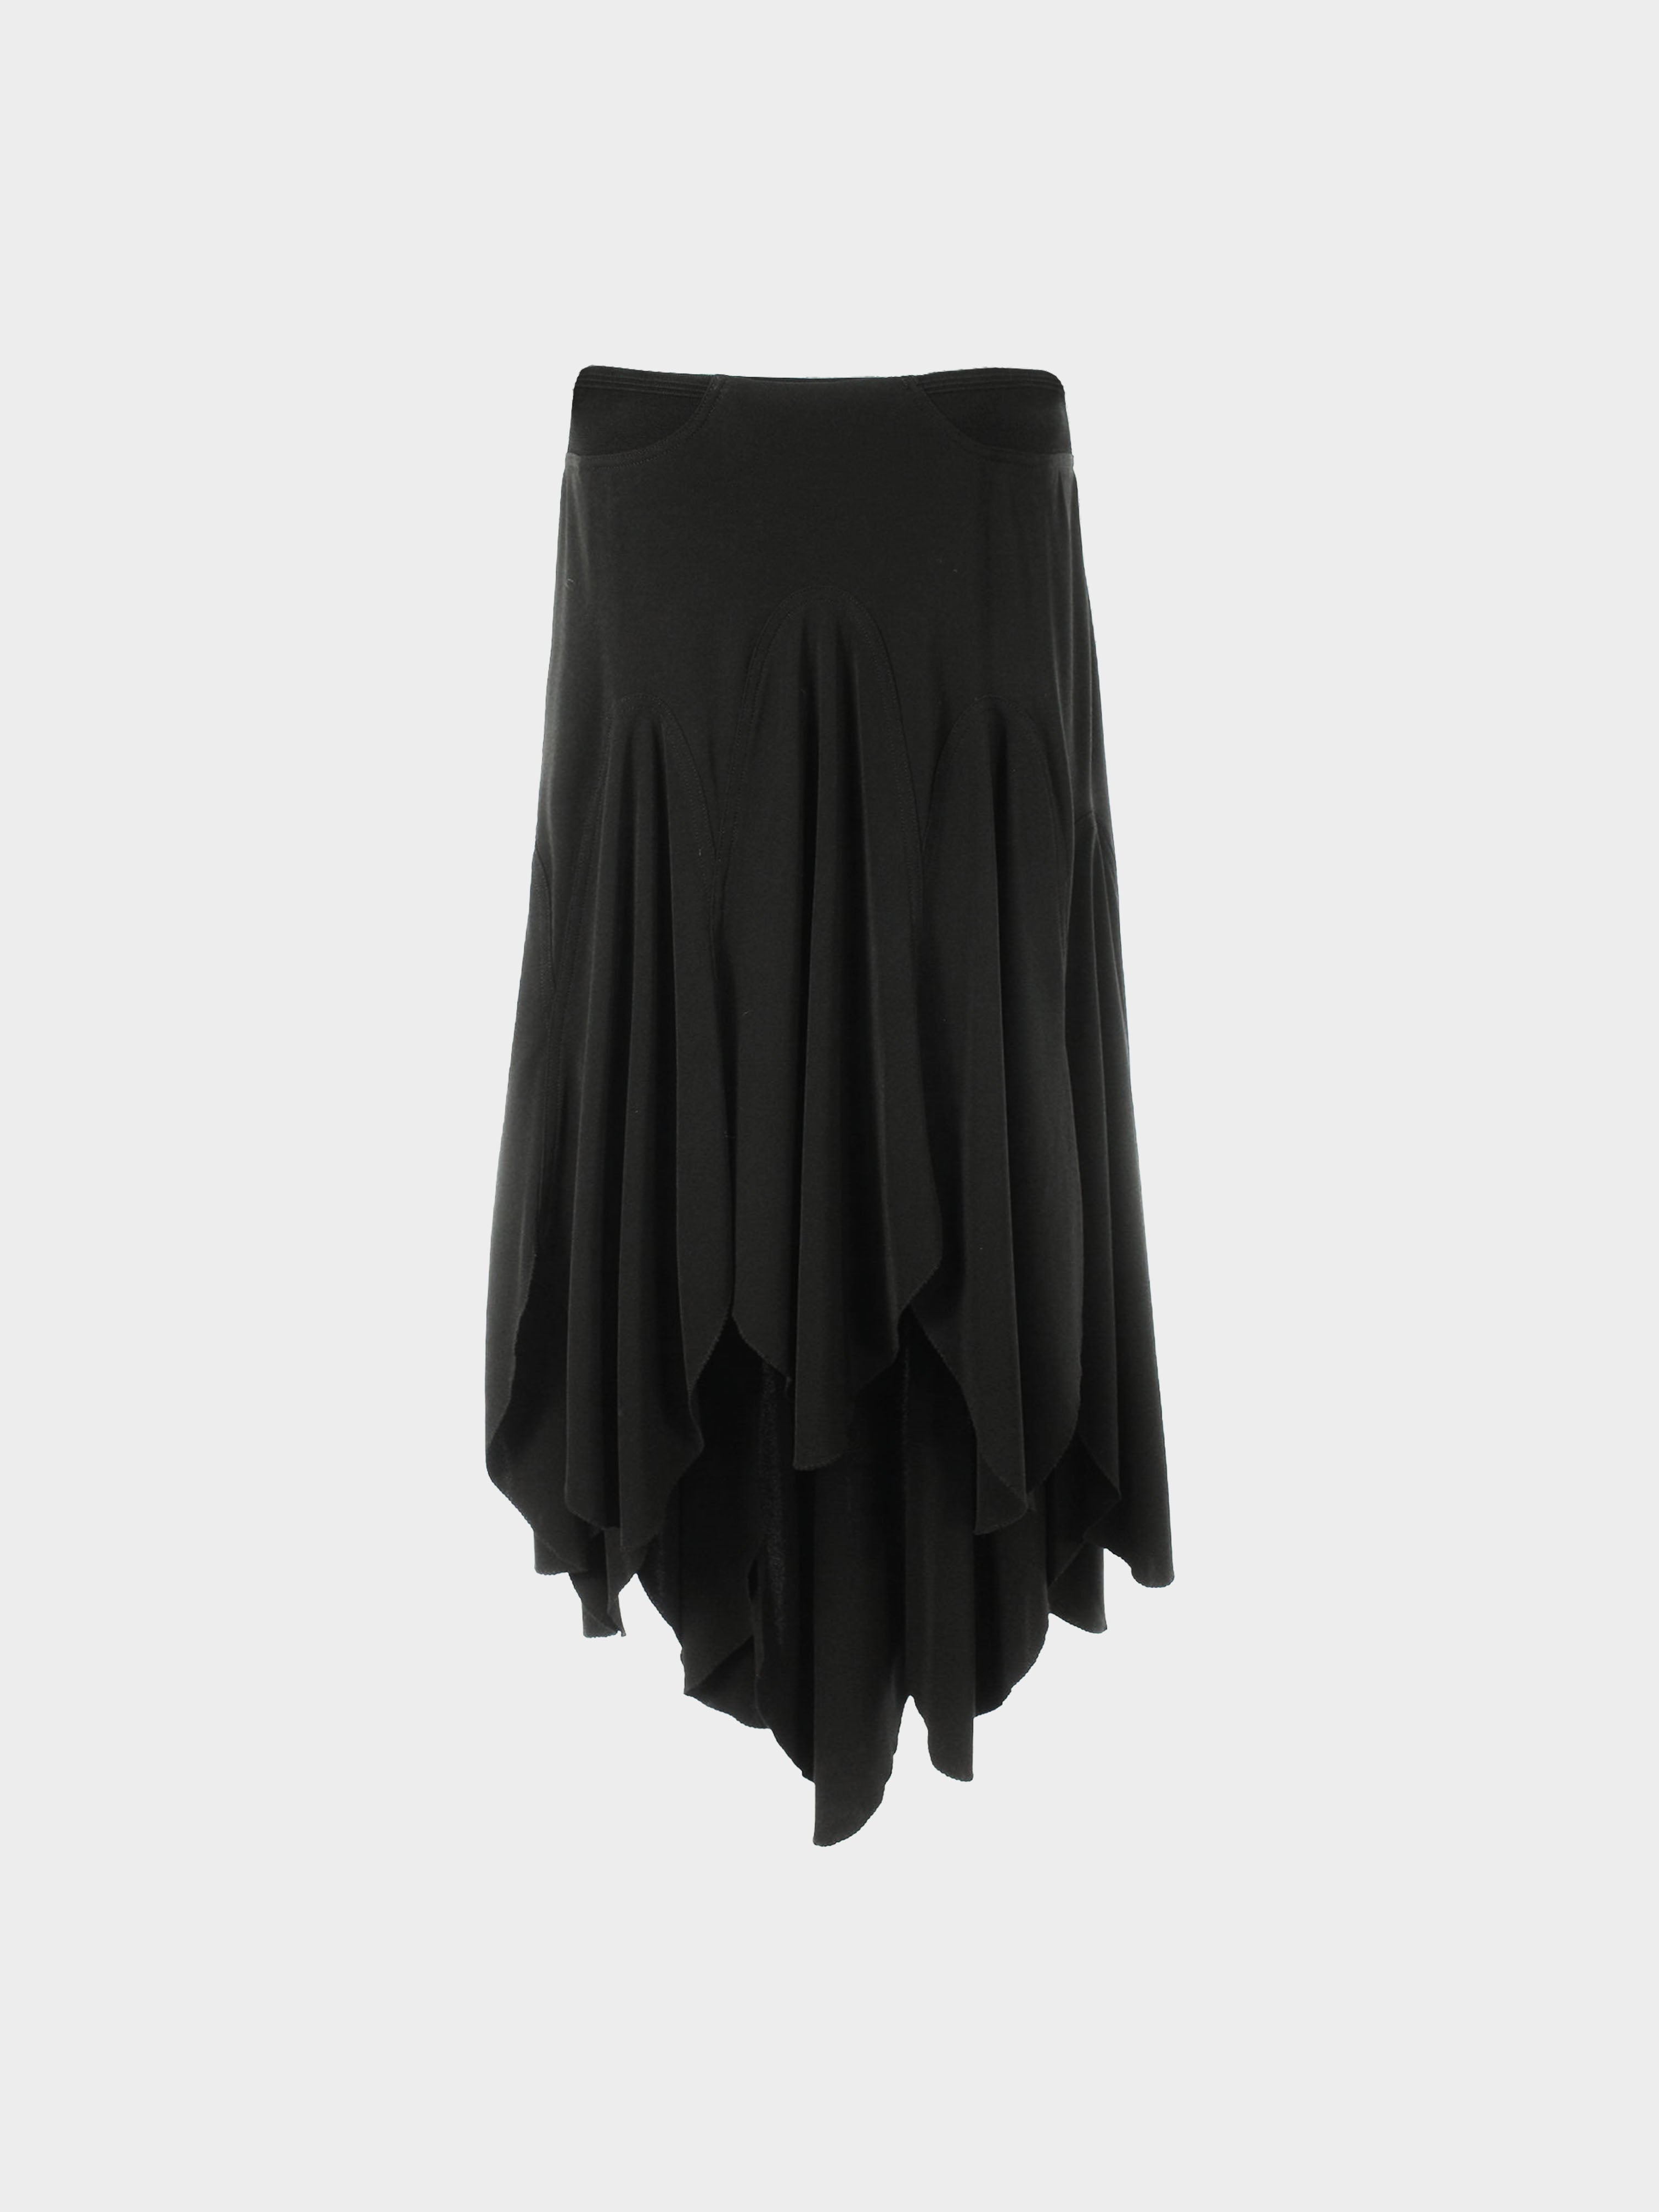 Jean Paul Gaultier 1990s Femme Black Flare Skirt